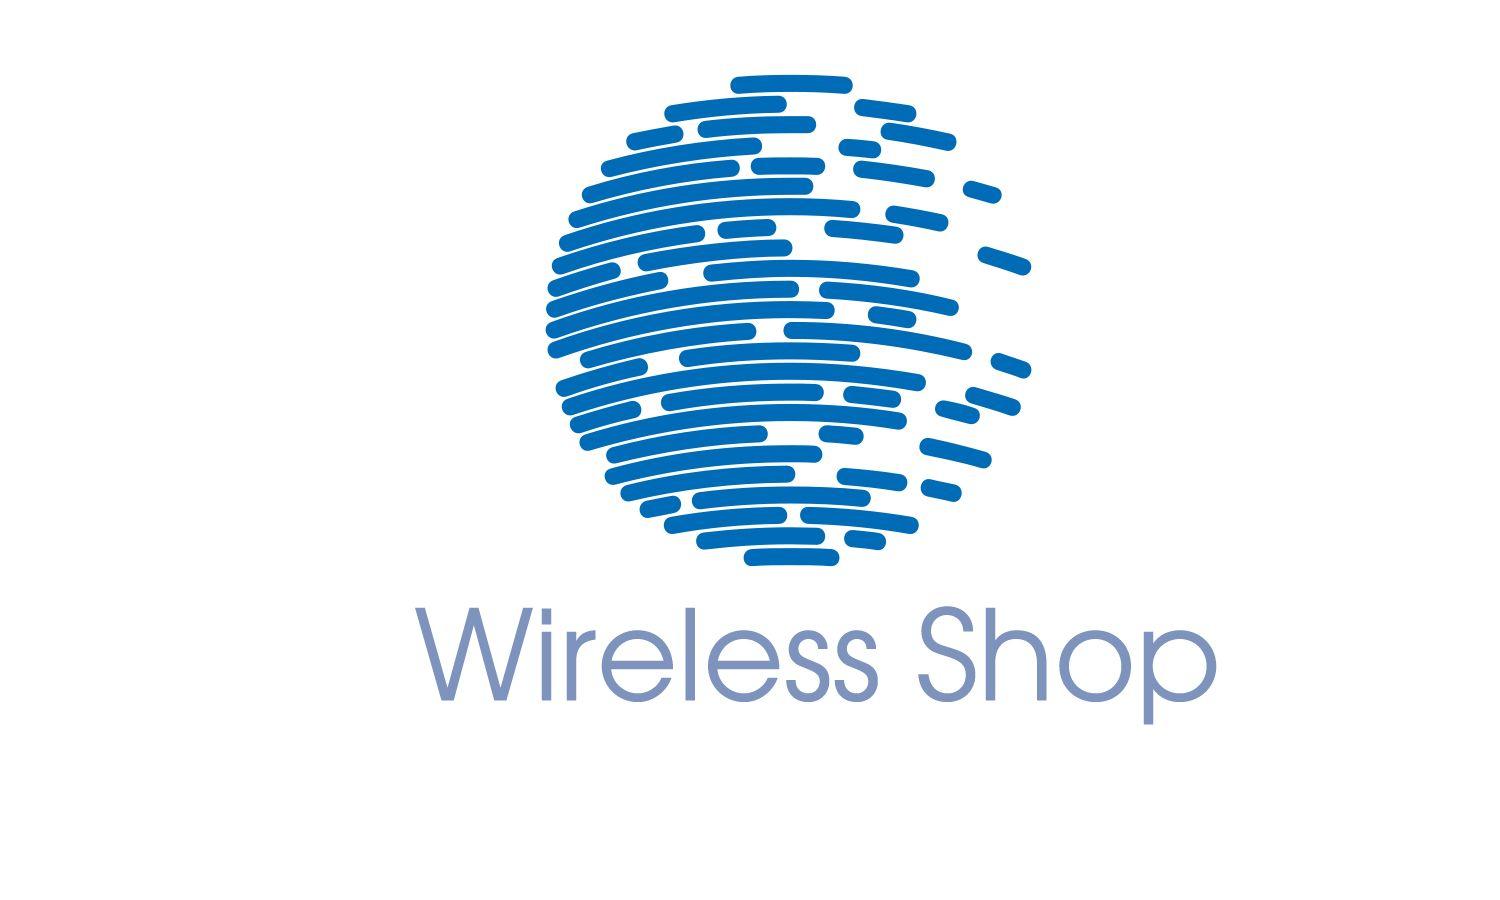 Wireless Shop Logo - Elegant, Playful, It Company Logo Design for Wireless World or ...